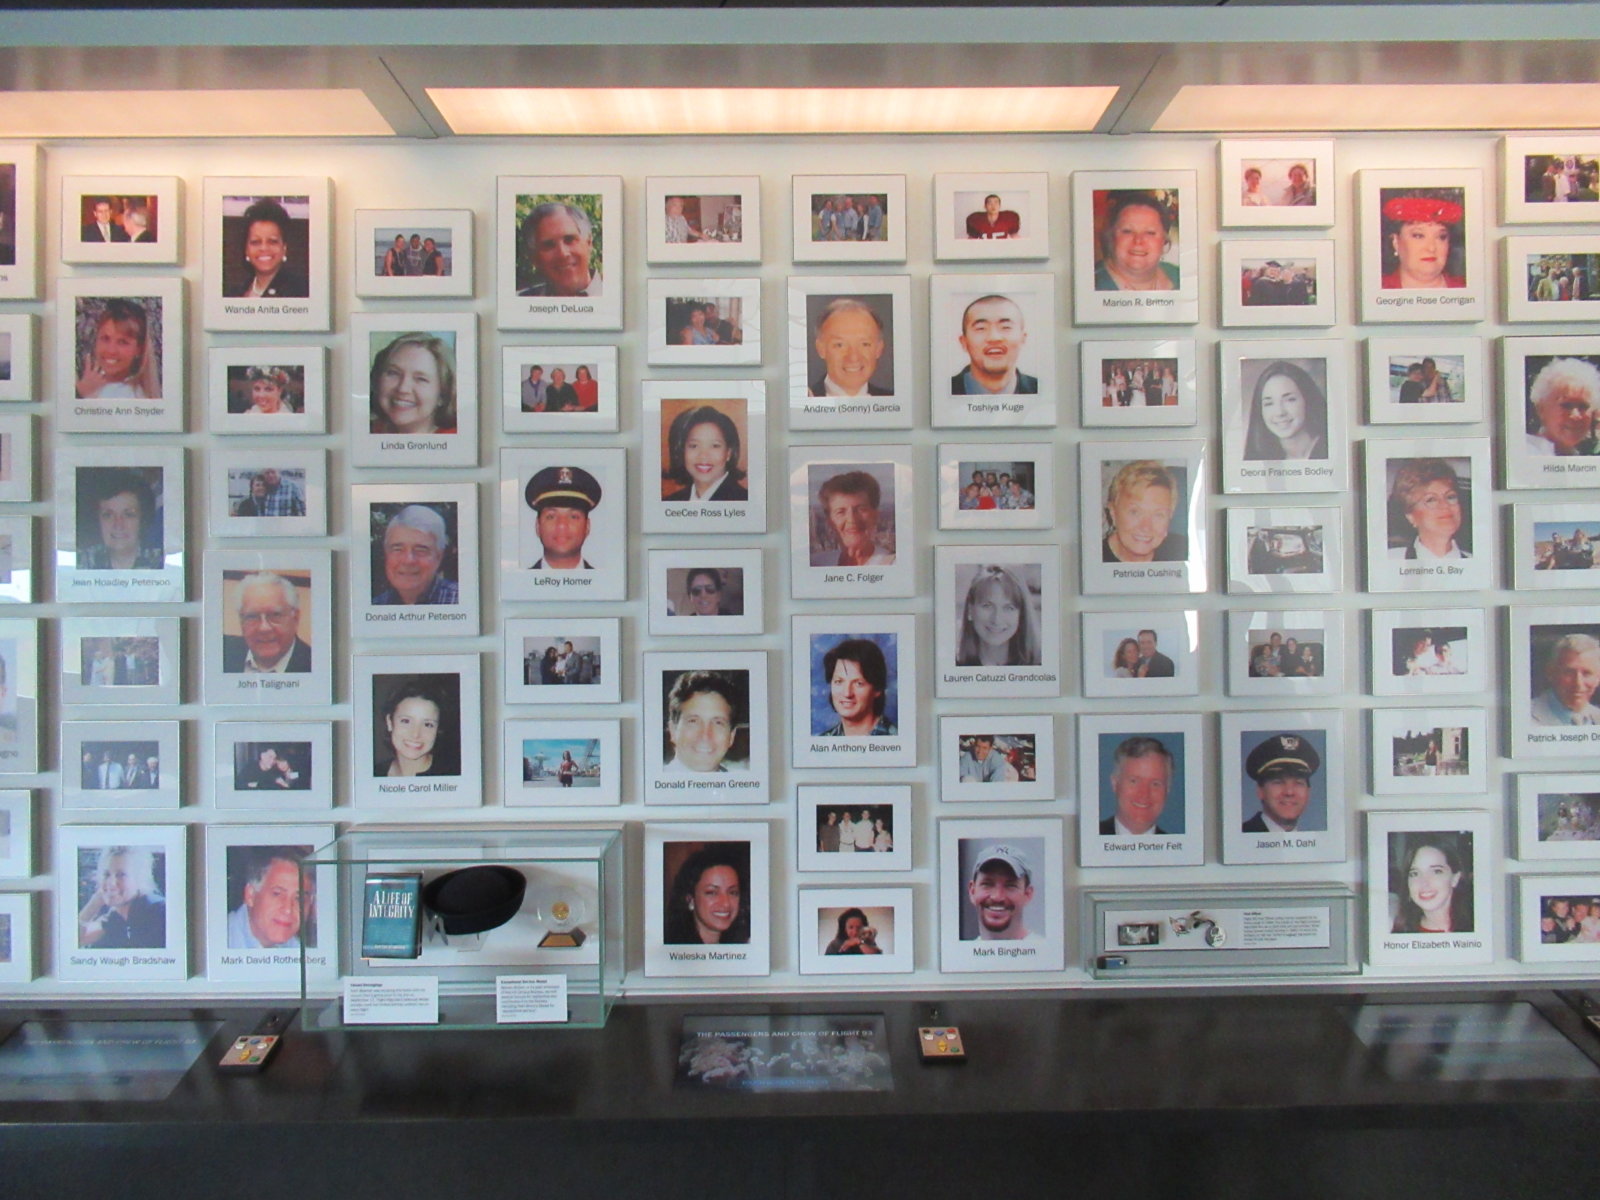 07-13 Flight 93 The Passengers